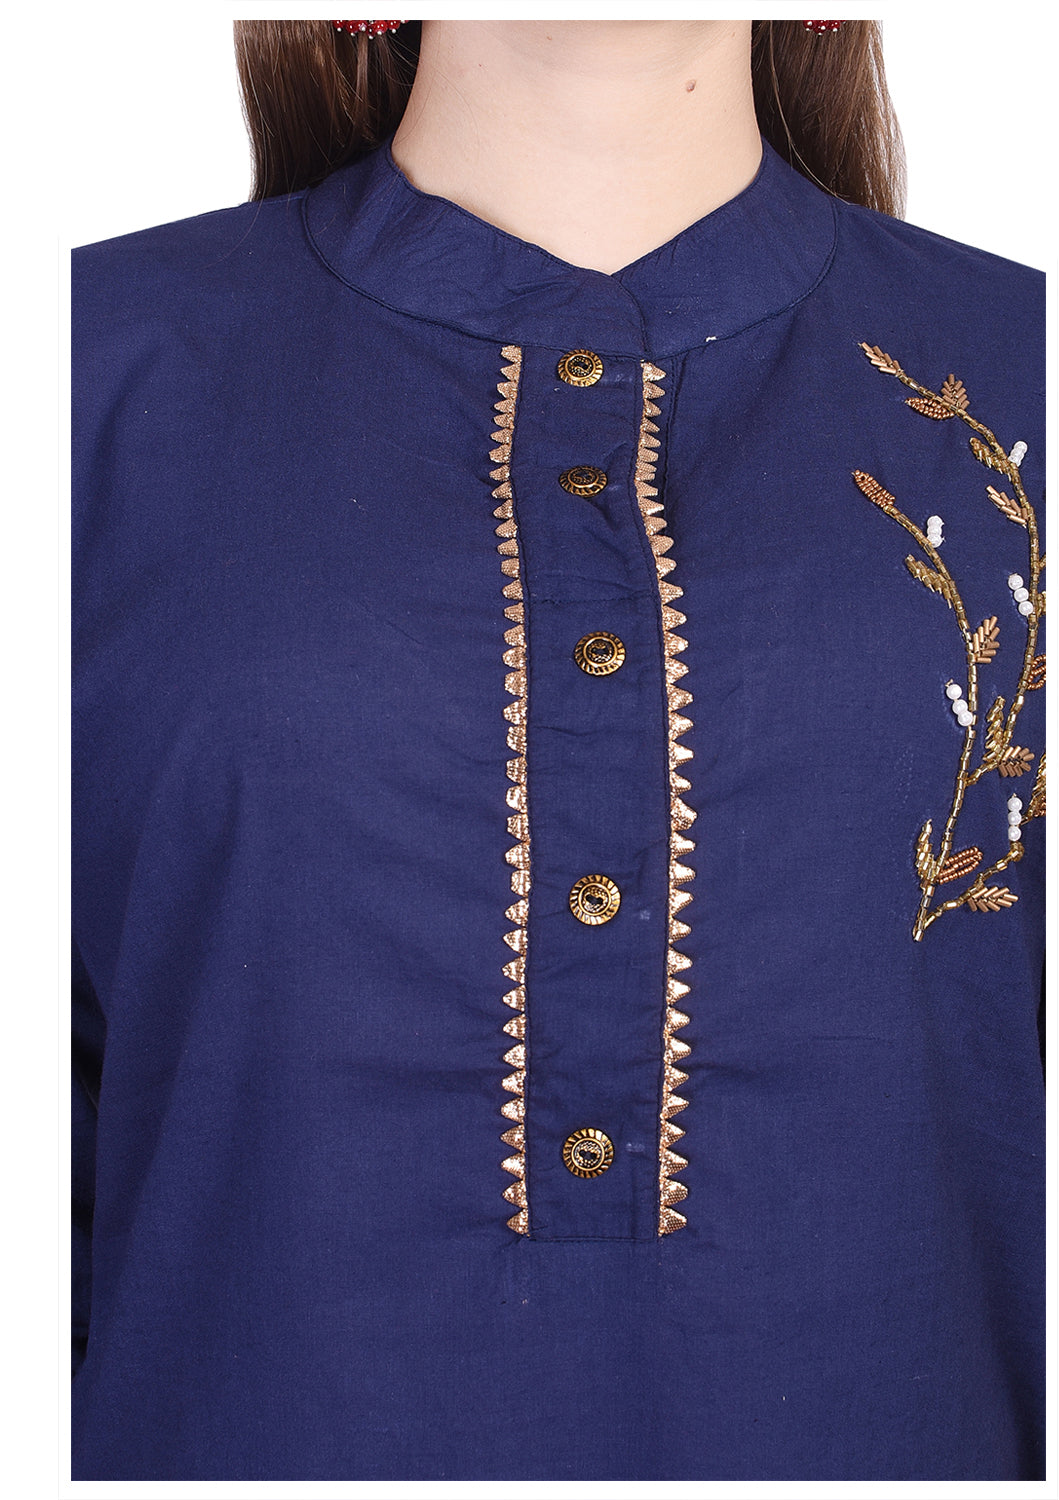 Embroidered Blue Cotton Kurta with Indigo Printed Sharara